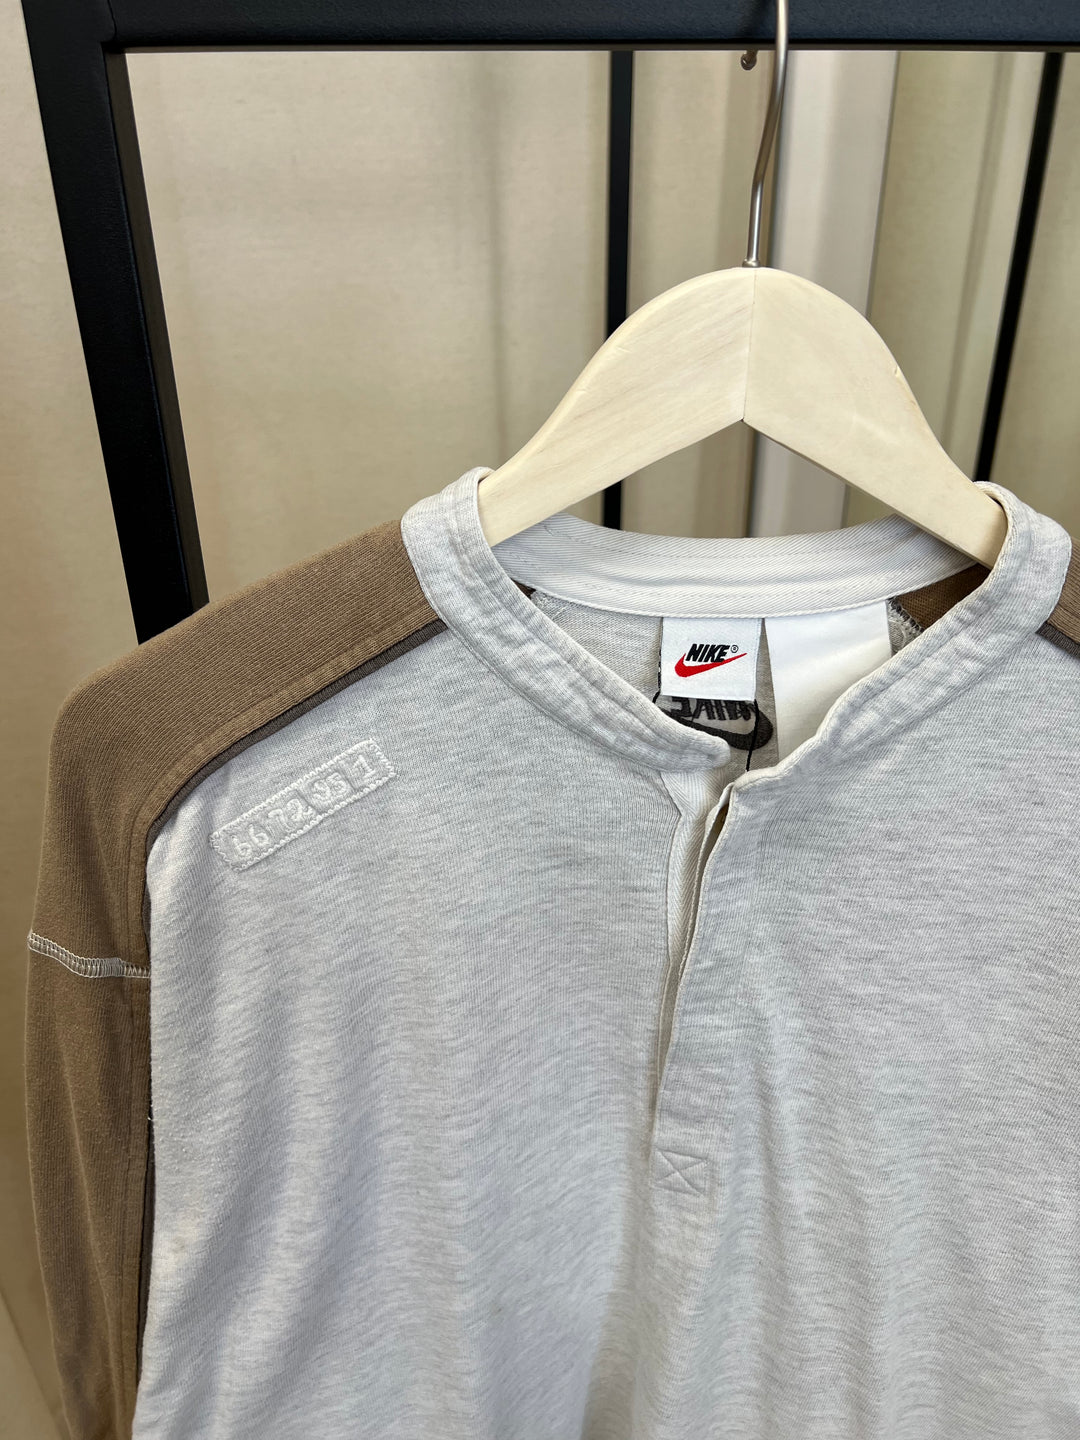 Nike Vintage Button Sweatshirt Men’s Extra Large